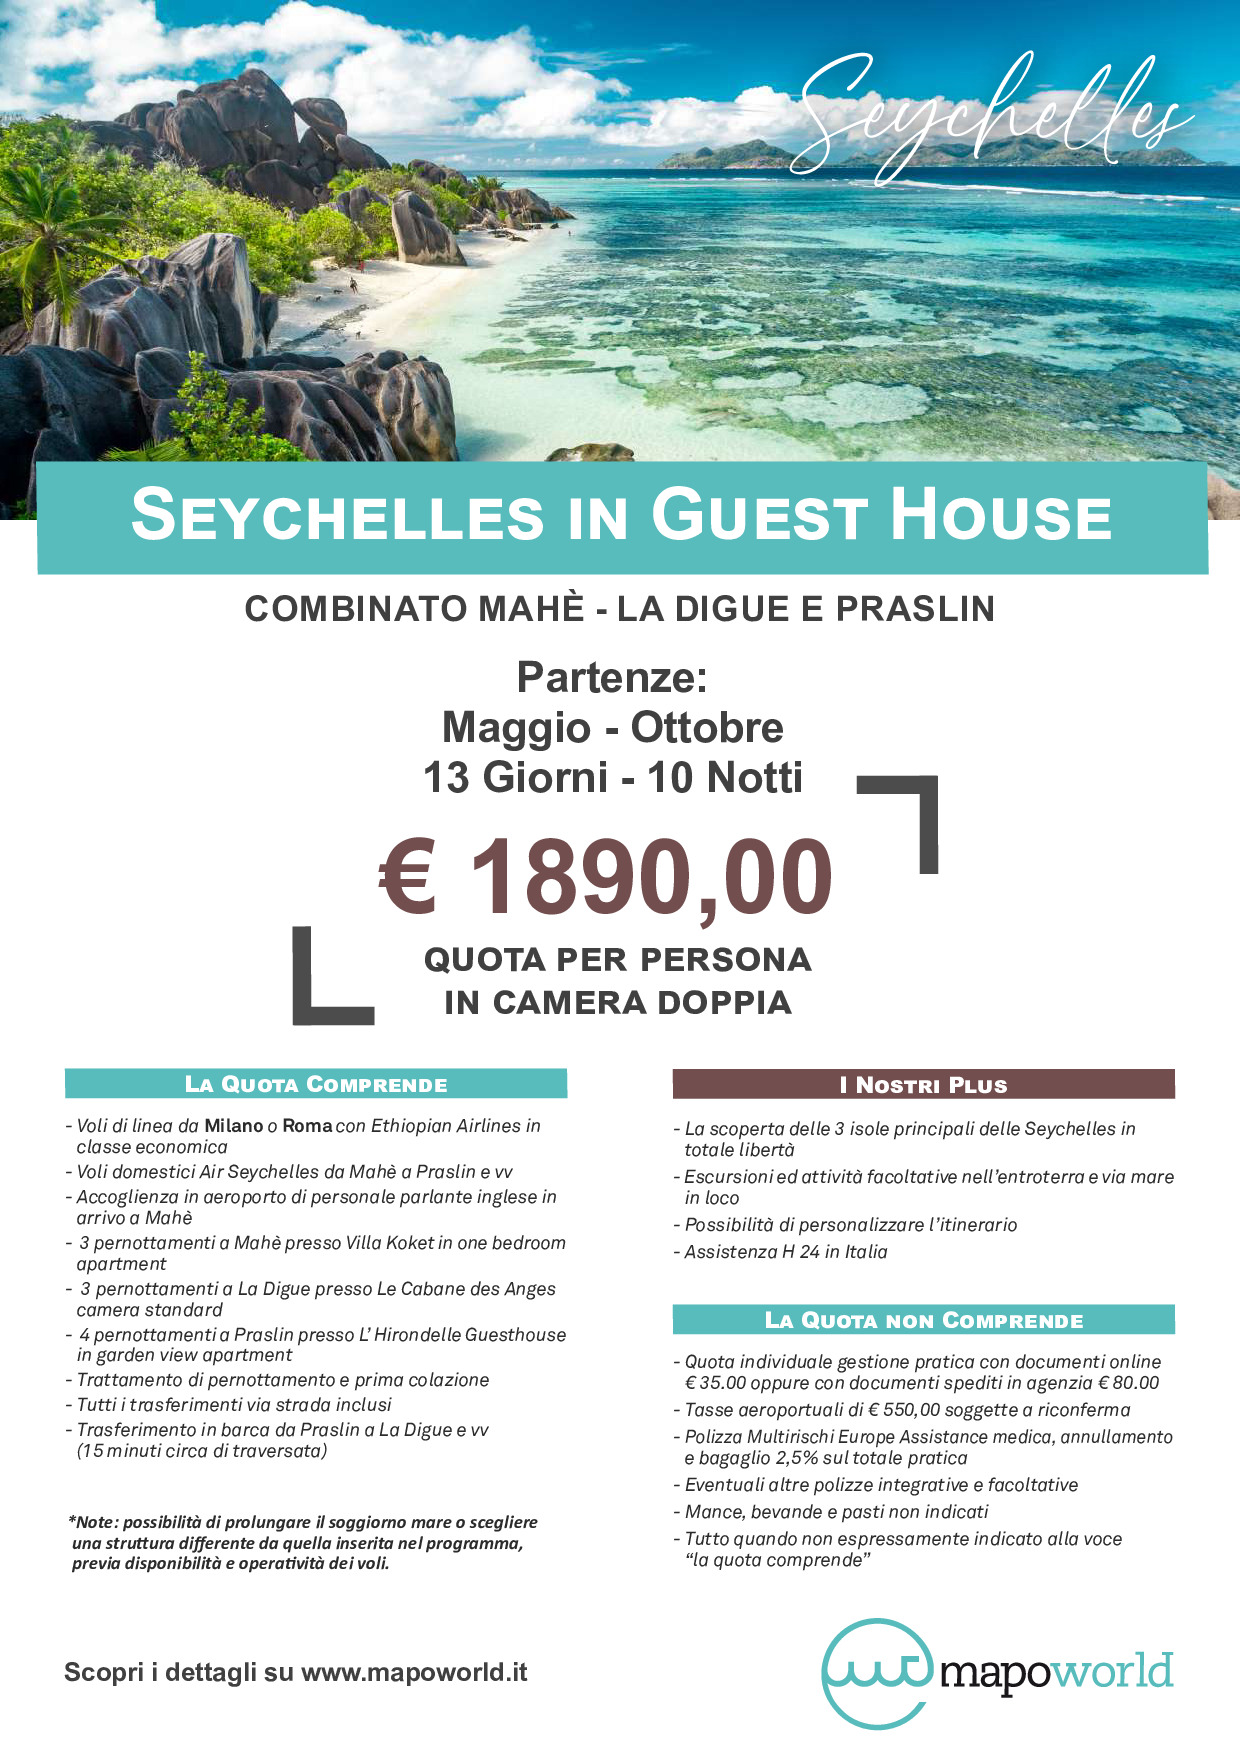 Seychelles in Guest House - Combo: Mahè - La Digue - Praslin